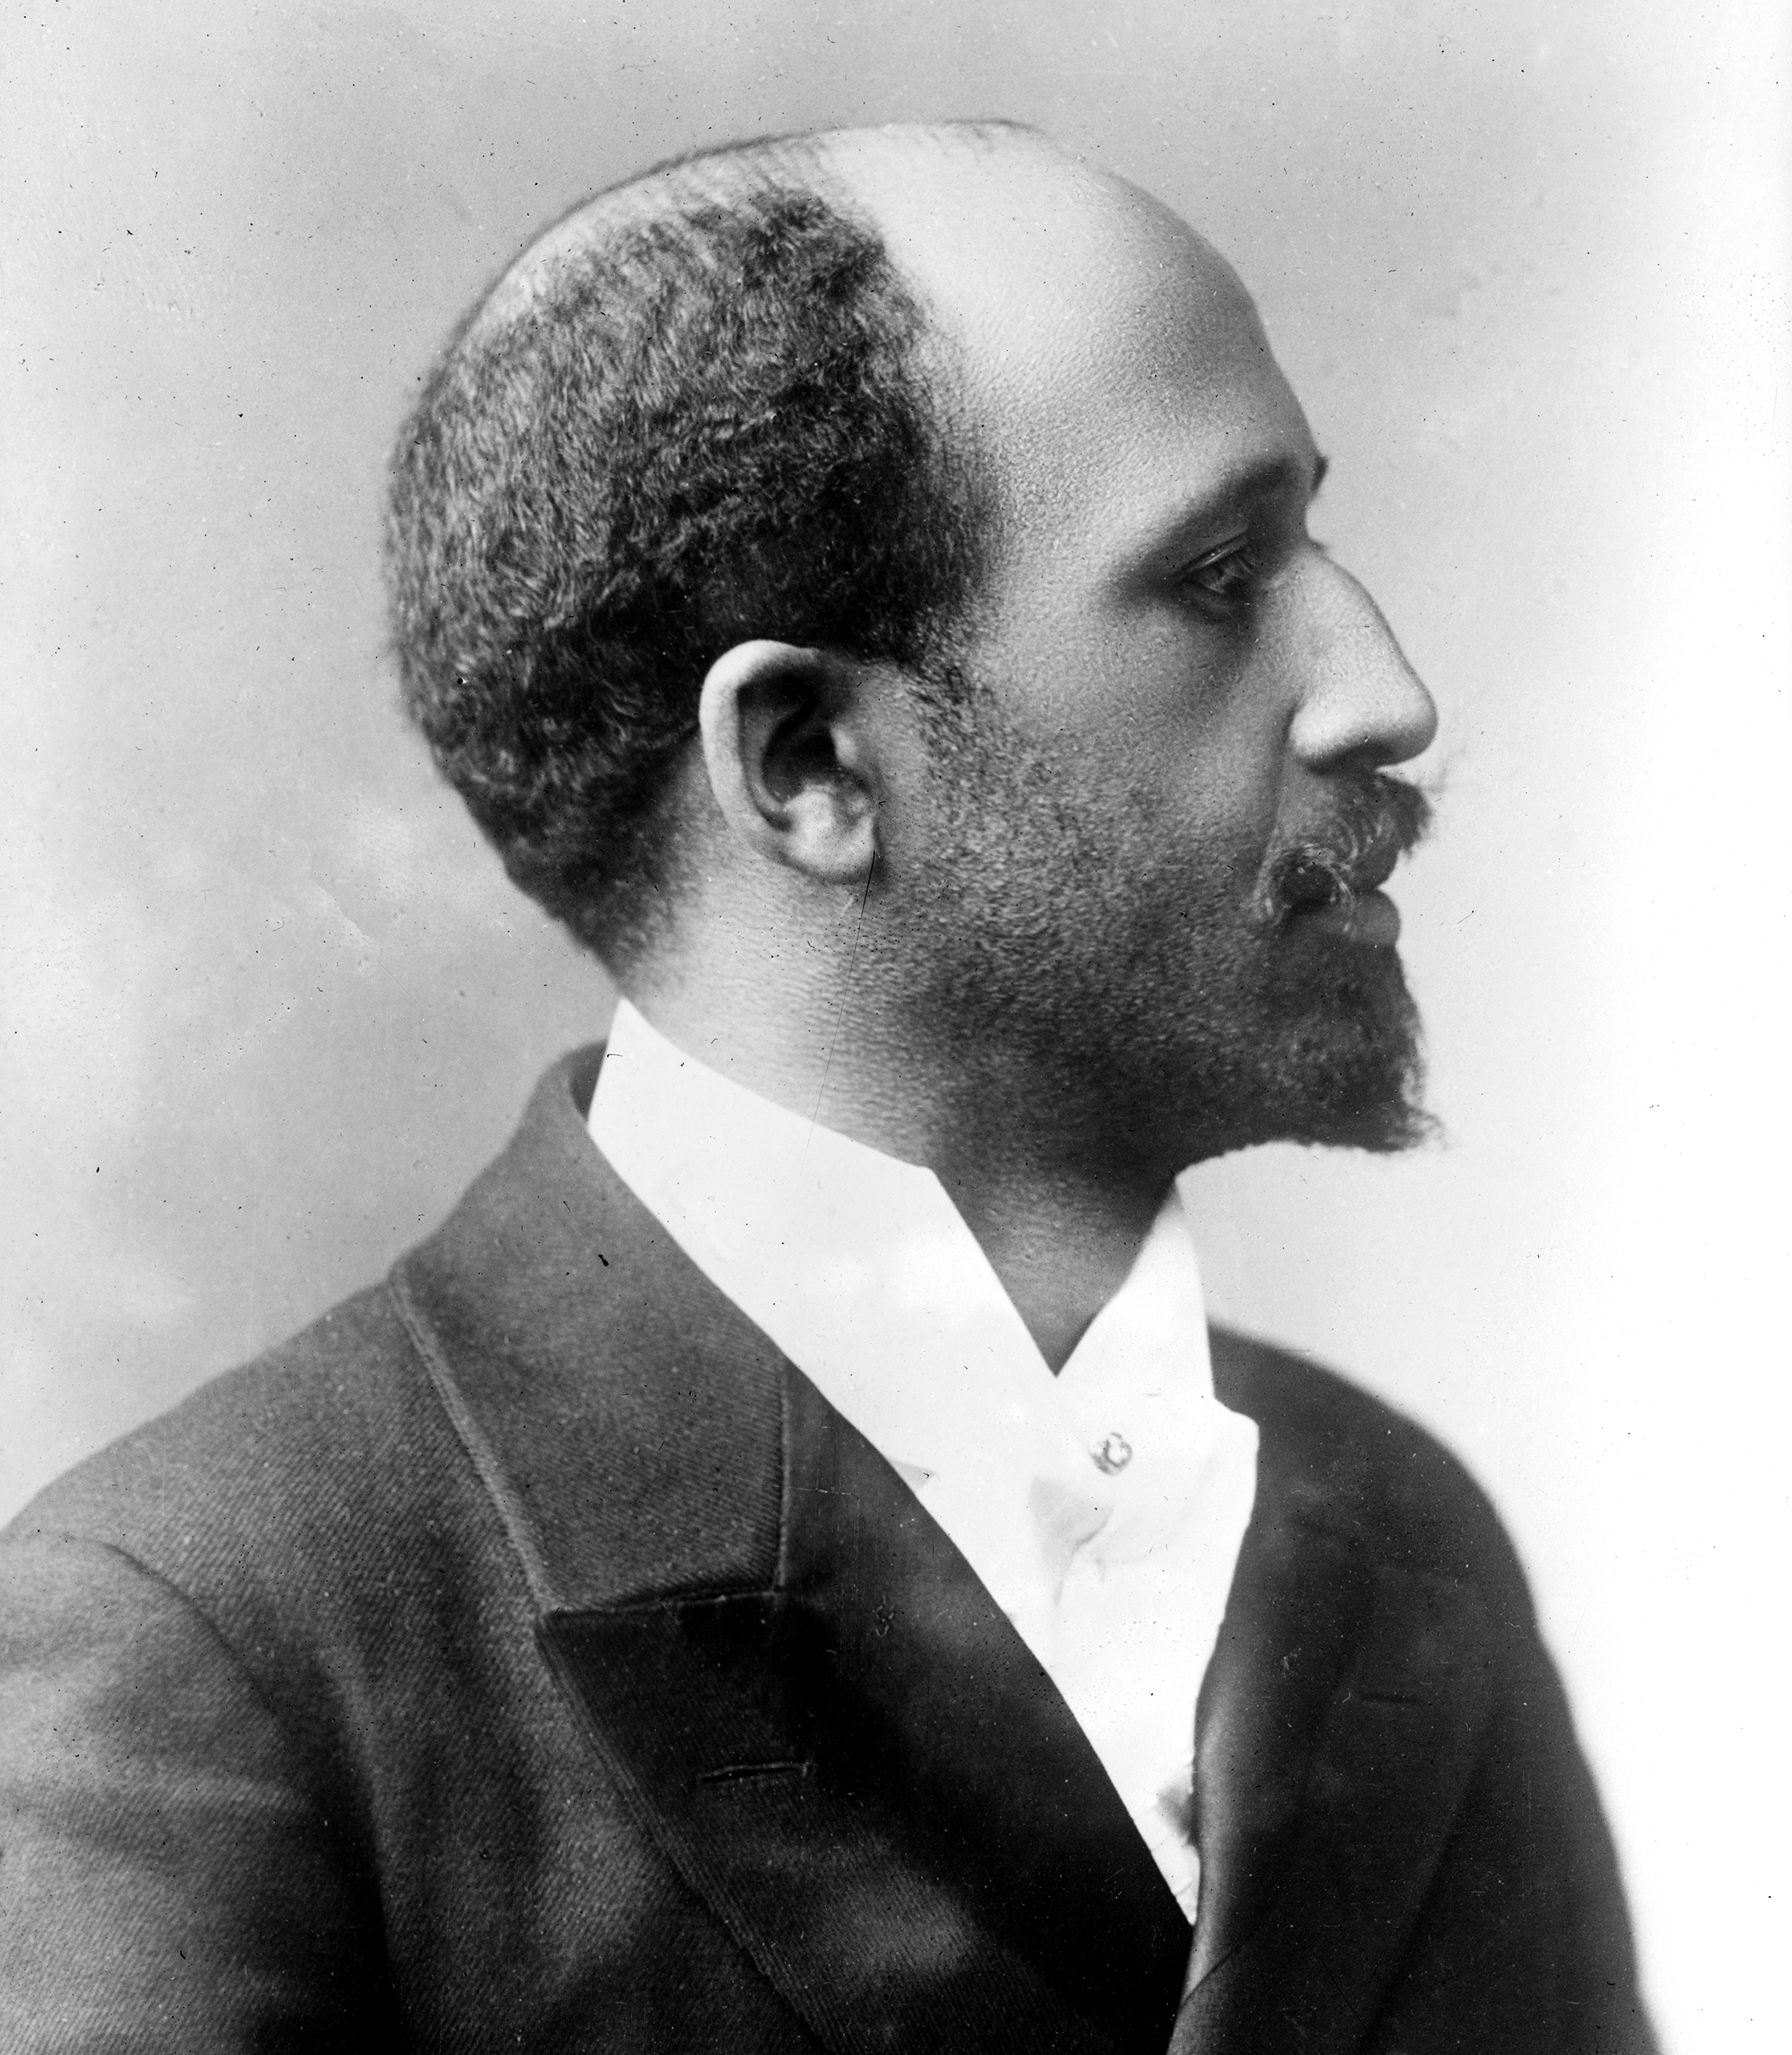 Portrait Of W.E.B. Dubois